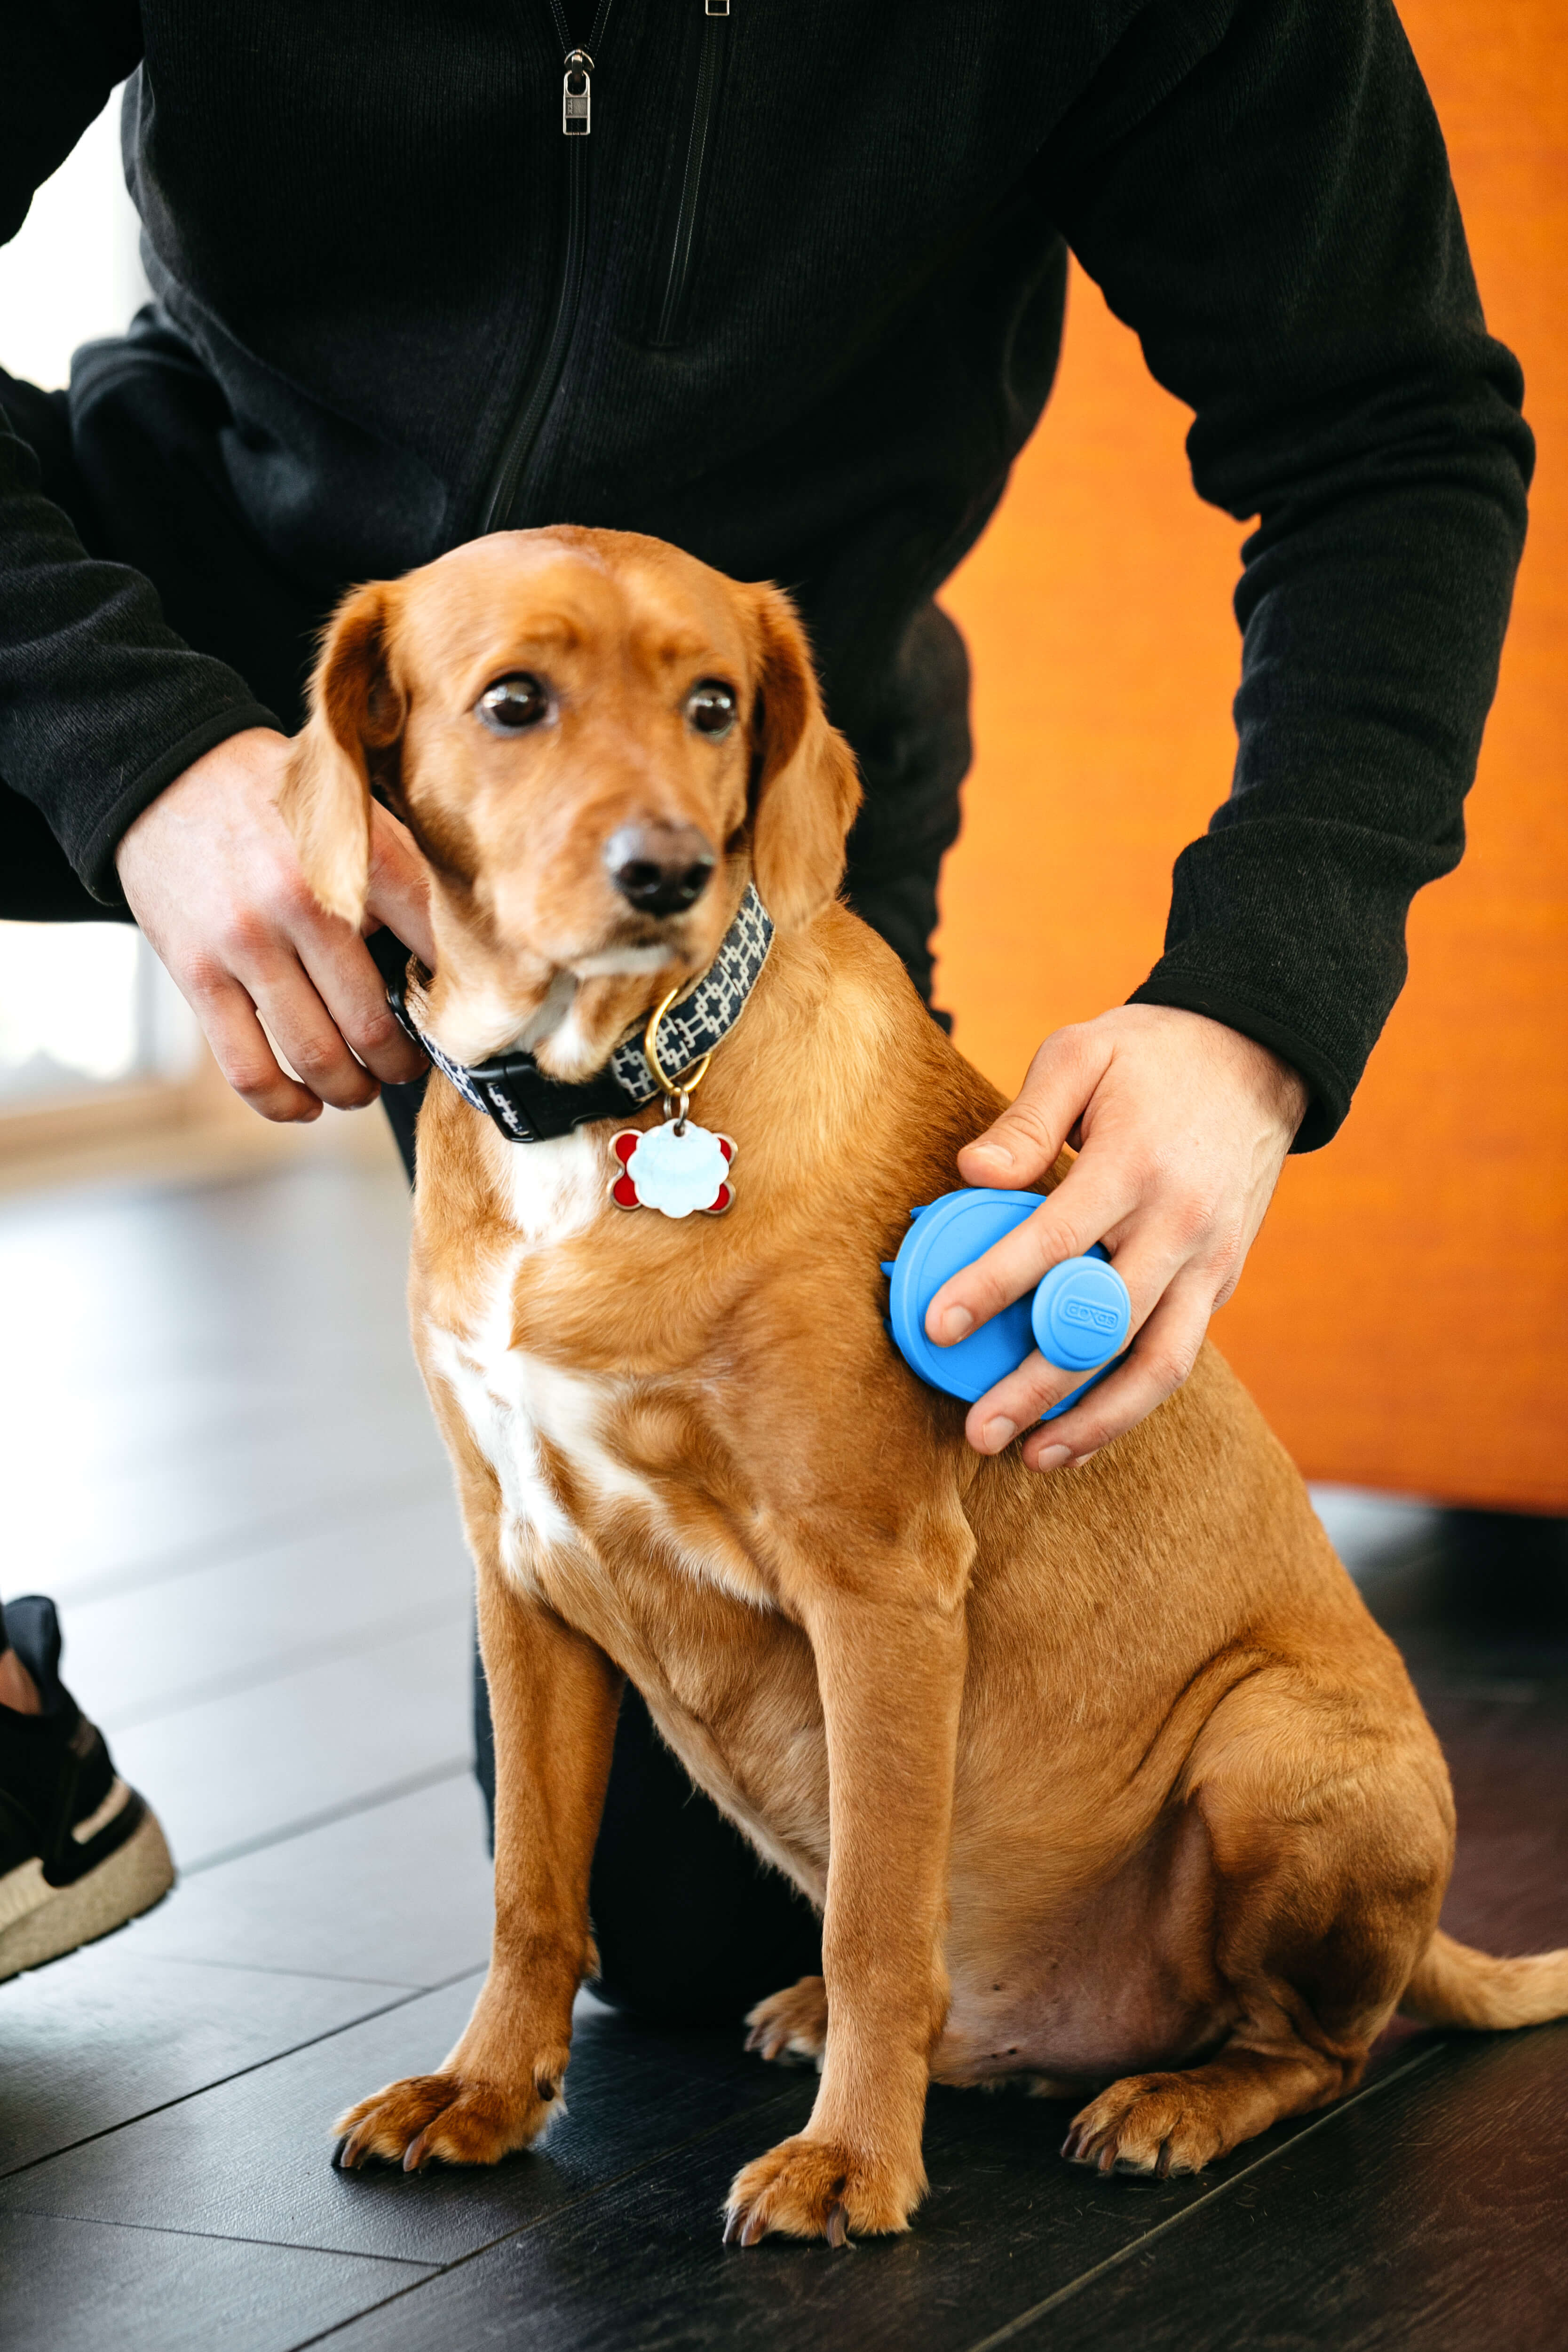 Dexas brushbuster silicone pet brush with dog